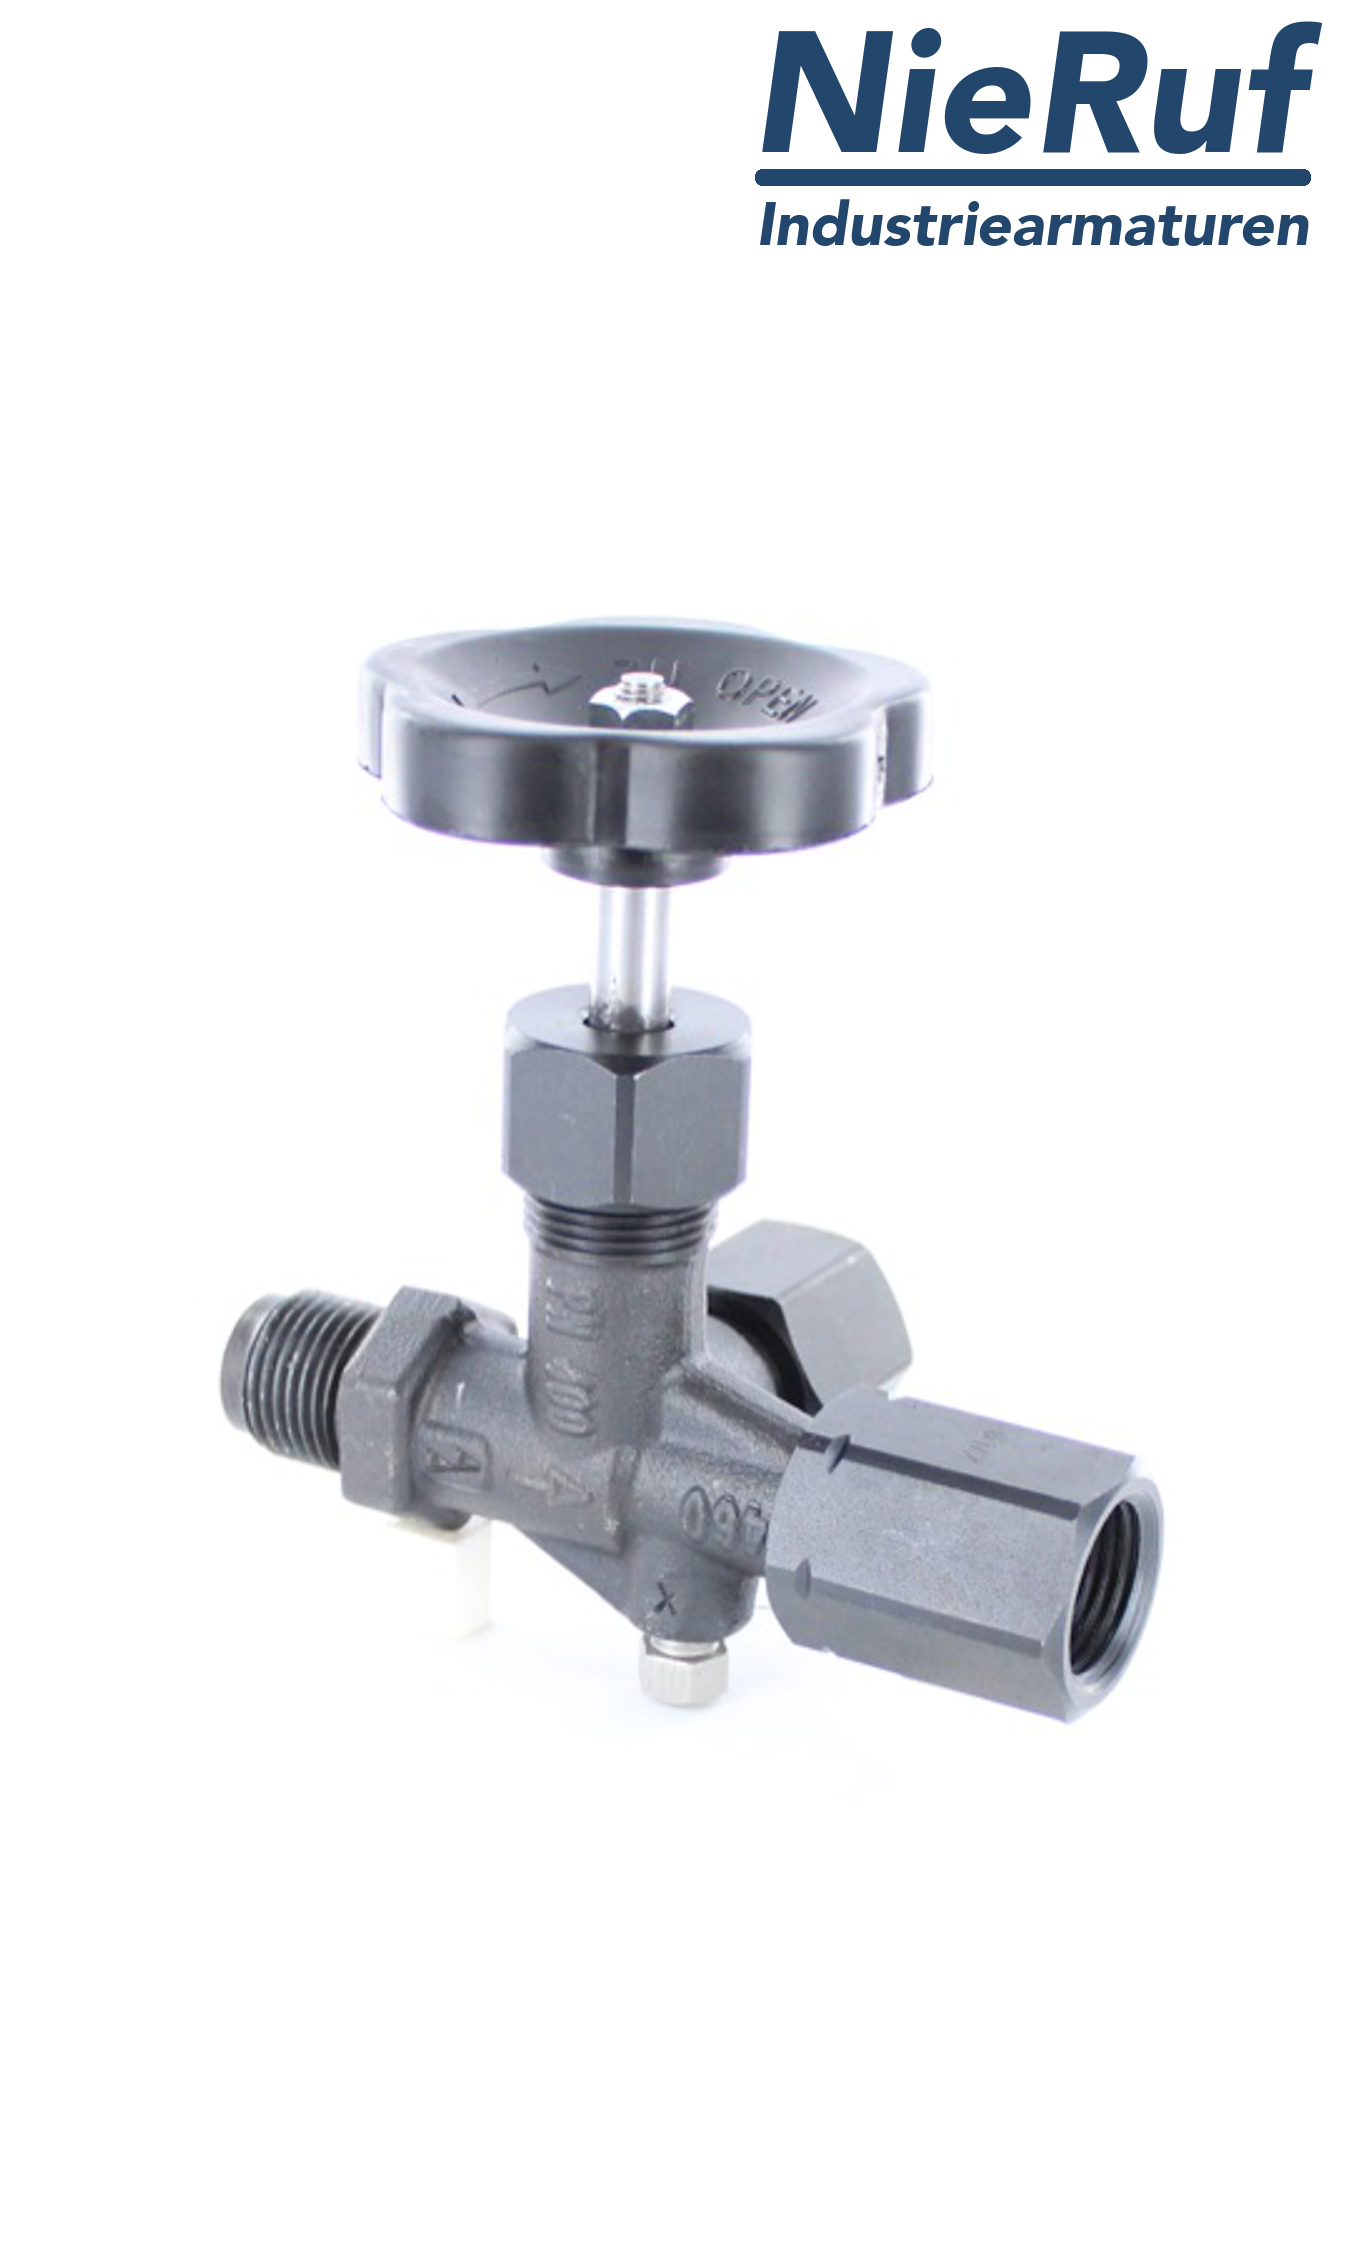 manometer gauge valves male thread x sleeve x test connector M20x1,5 DIN 16271 steel 1.0460 400 bar